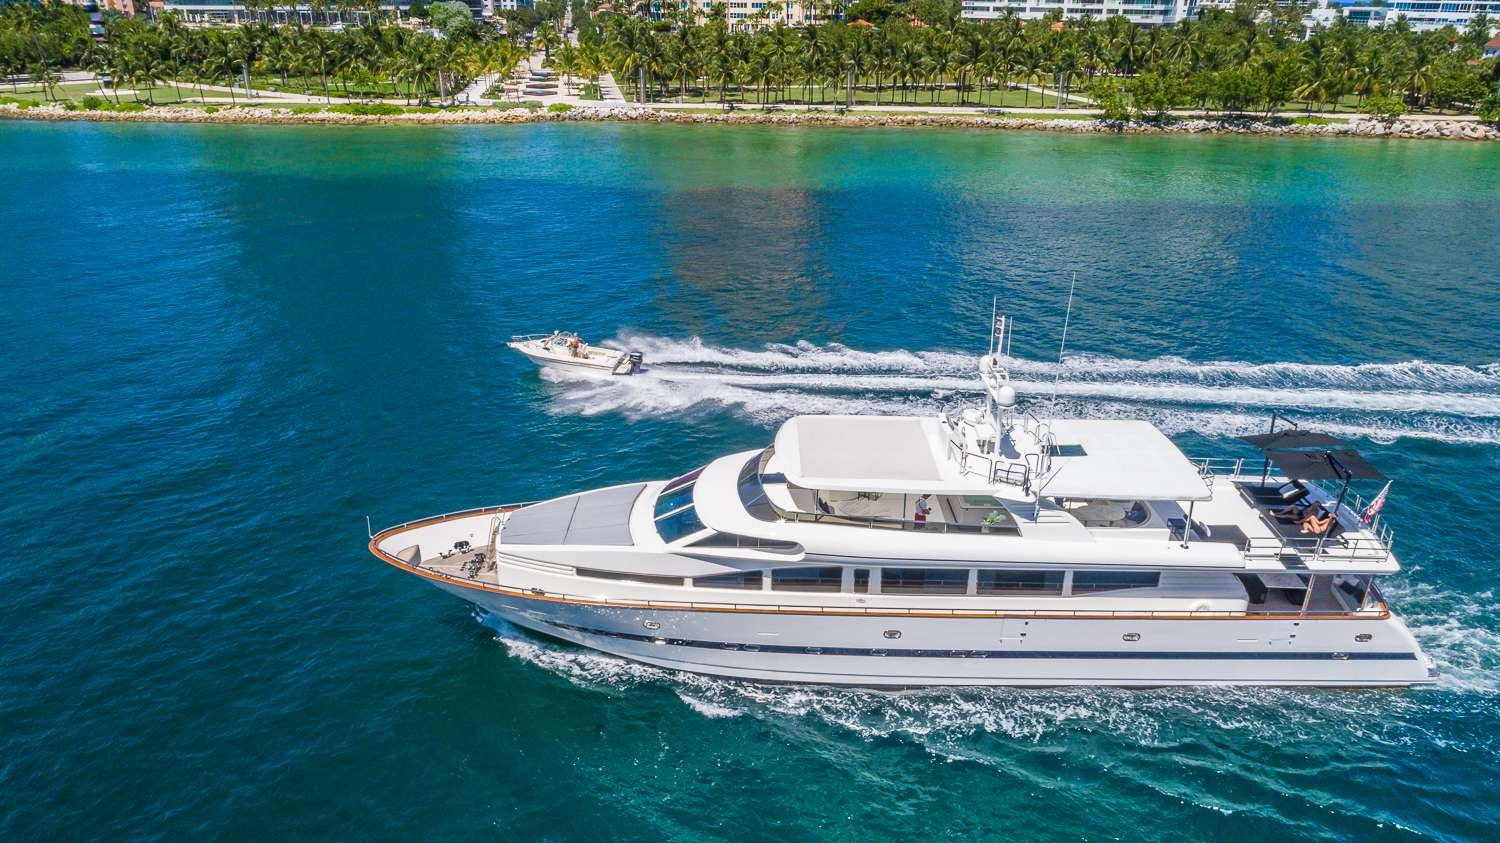 Nirvana Yacht - Seaduction Yacht Charters